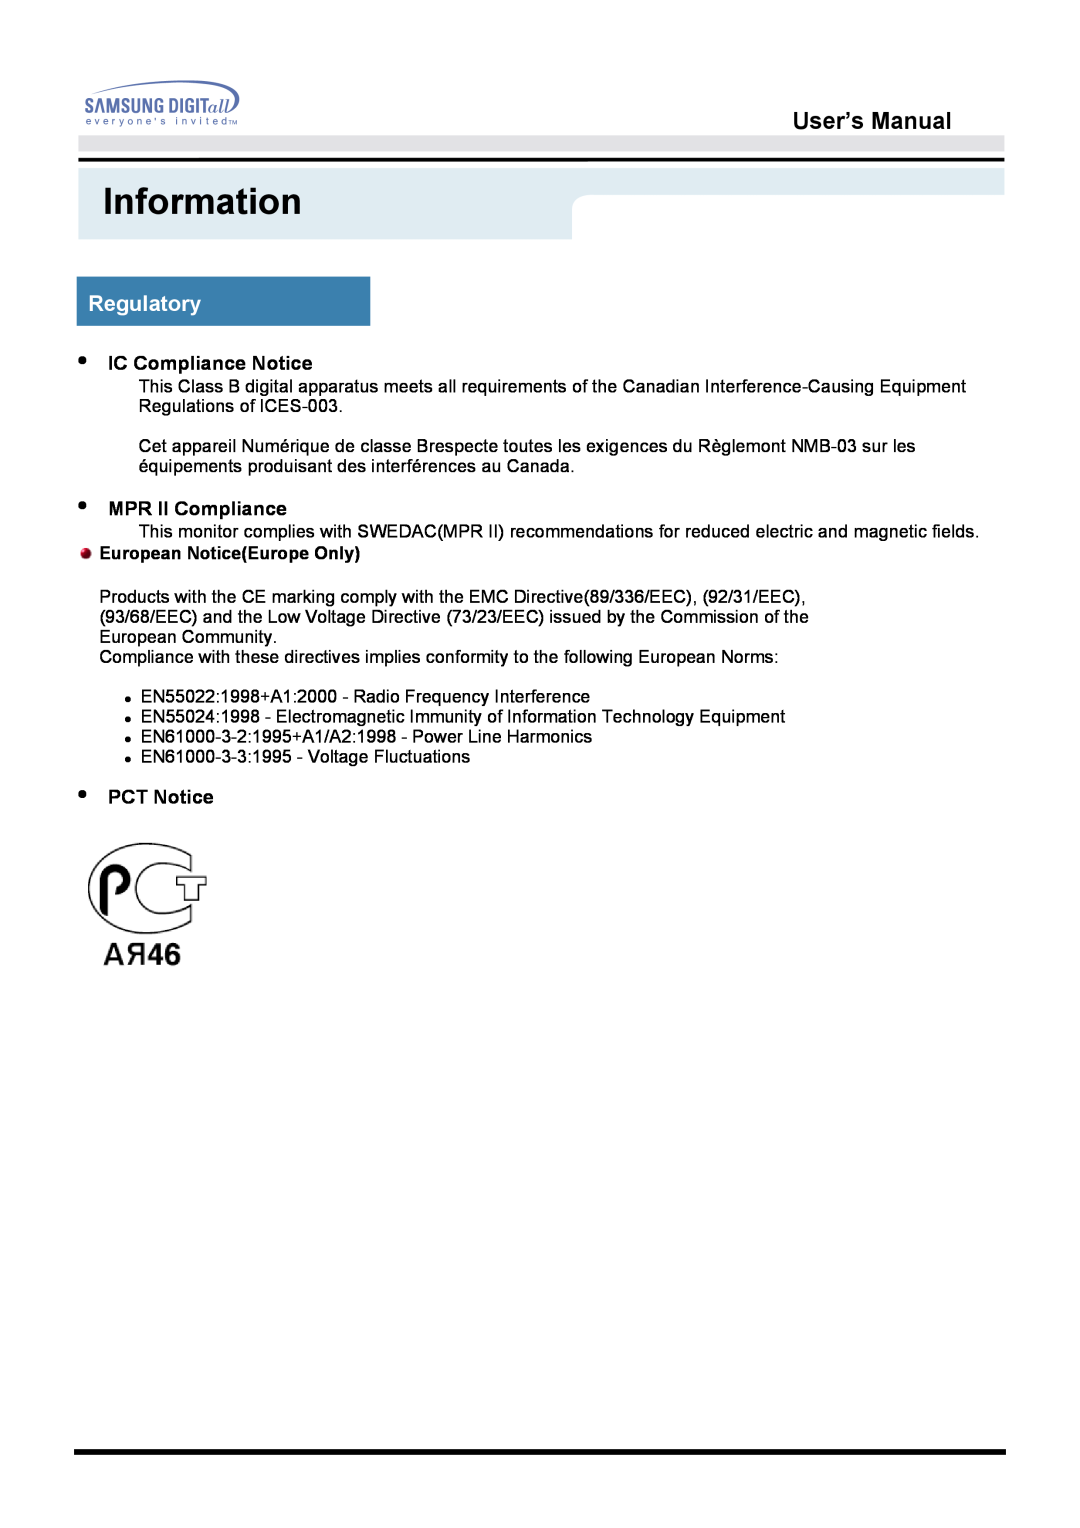 Samsung 172S manual Information, User’s Manual, Regulatory, IC Compliance Notice, MPR II Compliance, PCT Notice 